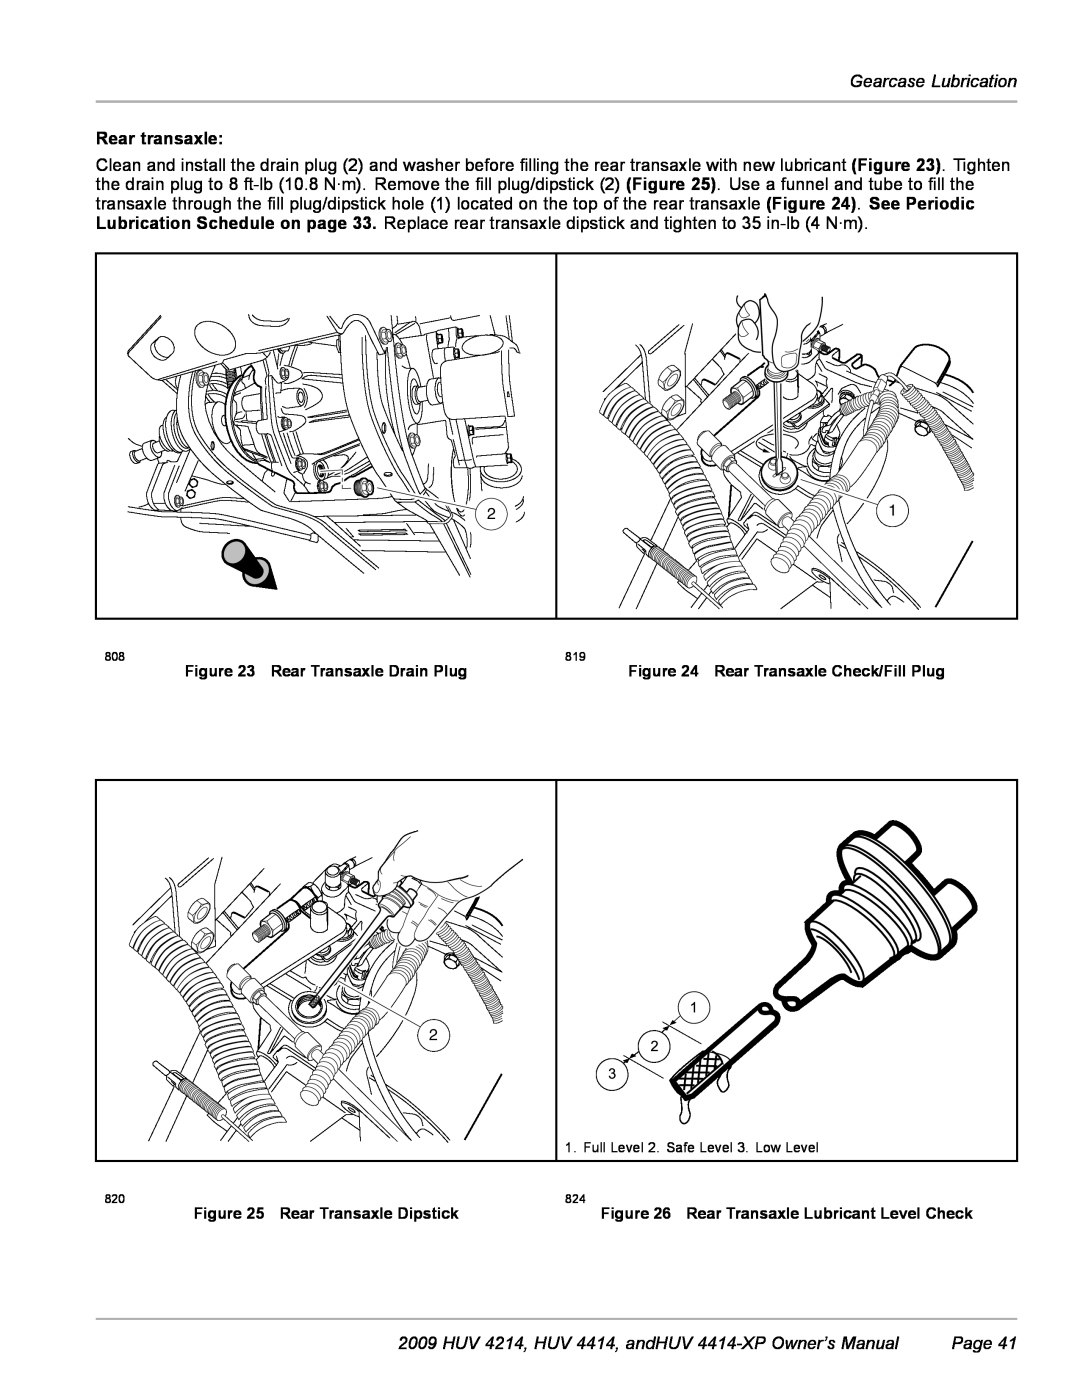 Husqvarna owner manual Gearcase Lubrication, Rear transaxle, HUV 4214, HUV 4414, andHUV 4414-XP Owner’s Manual, Page 